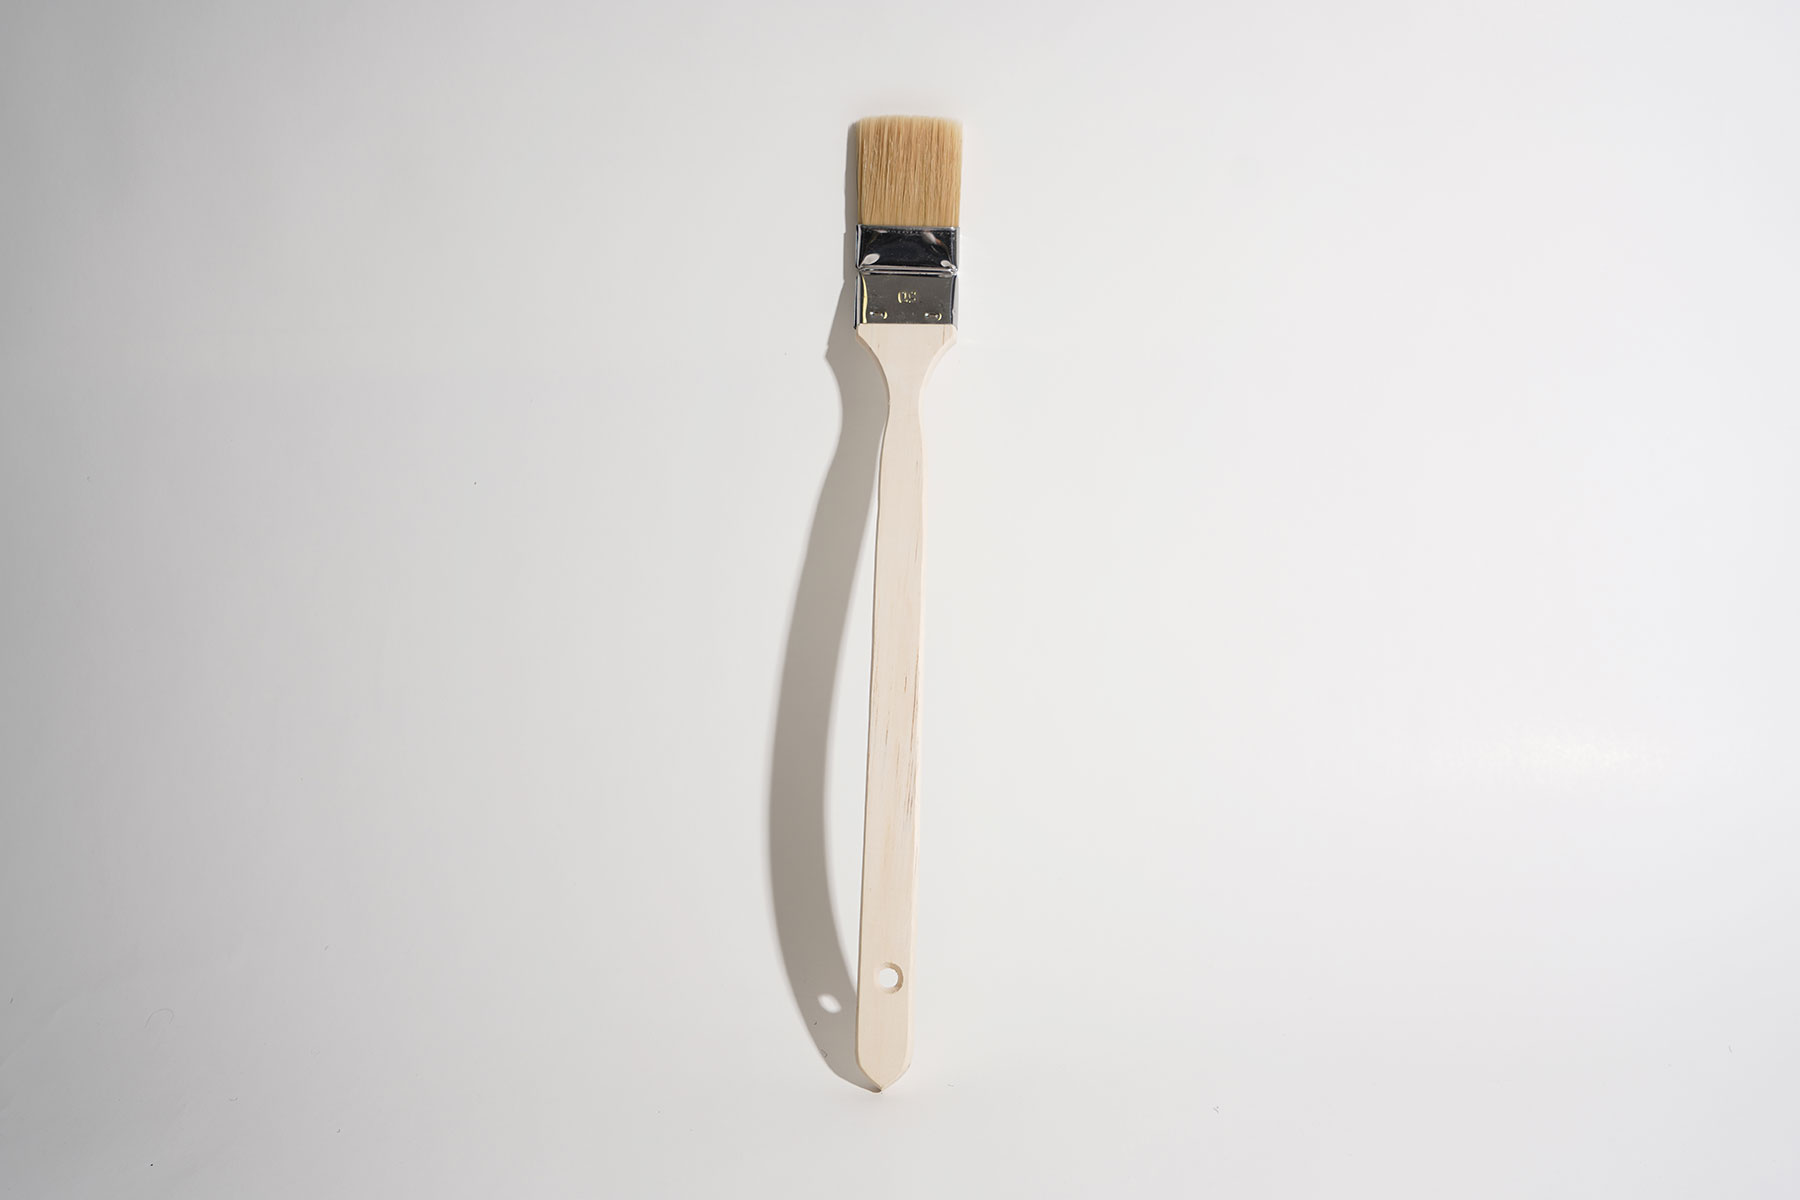             Corner brush 5cm, long wooden handle for painting work
        